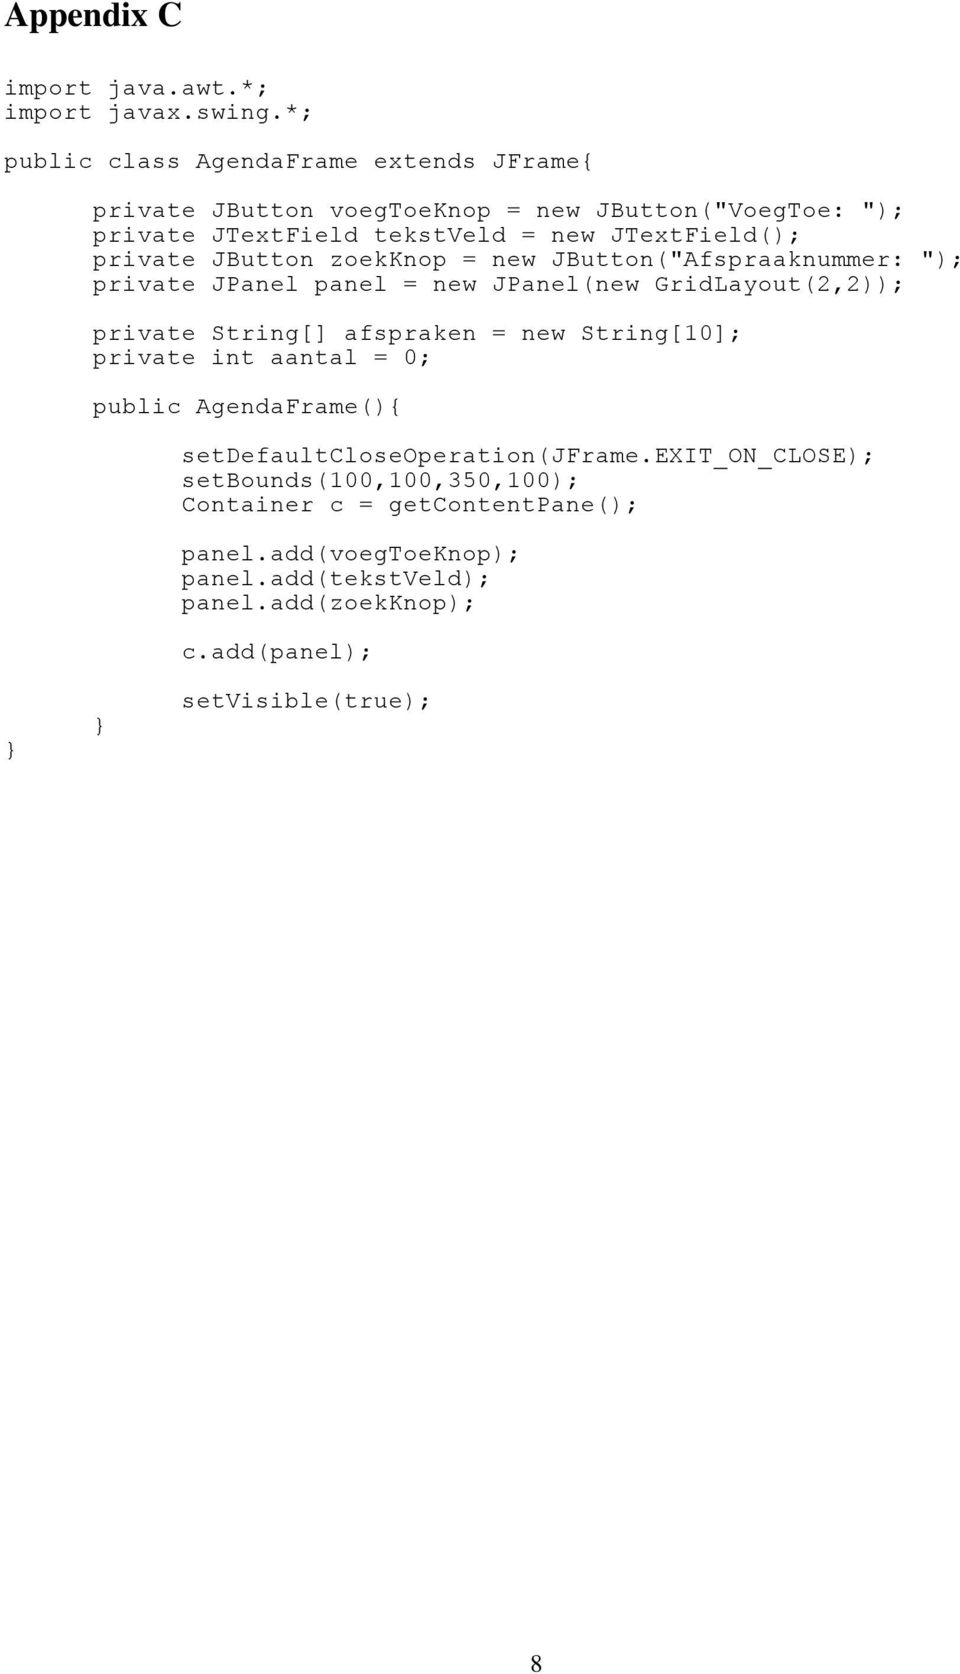 private JButton zoekknop = new JButton("Afspraaknummer: "); private JPanel panel = new JPanel(new GridLayout(2,2)); private String[] afspraken = new